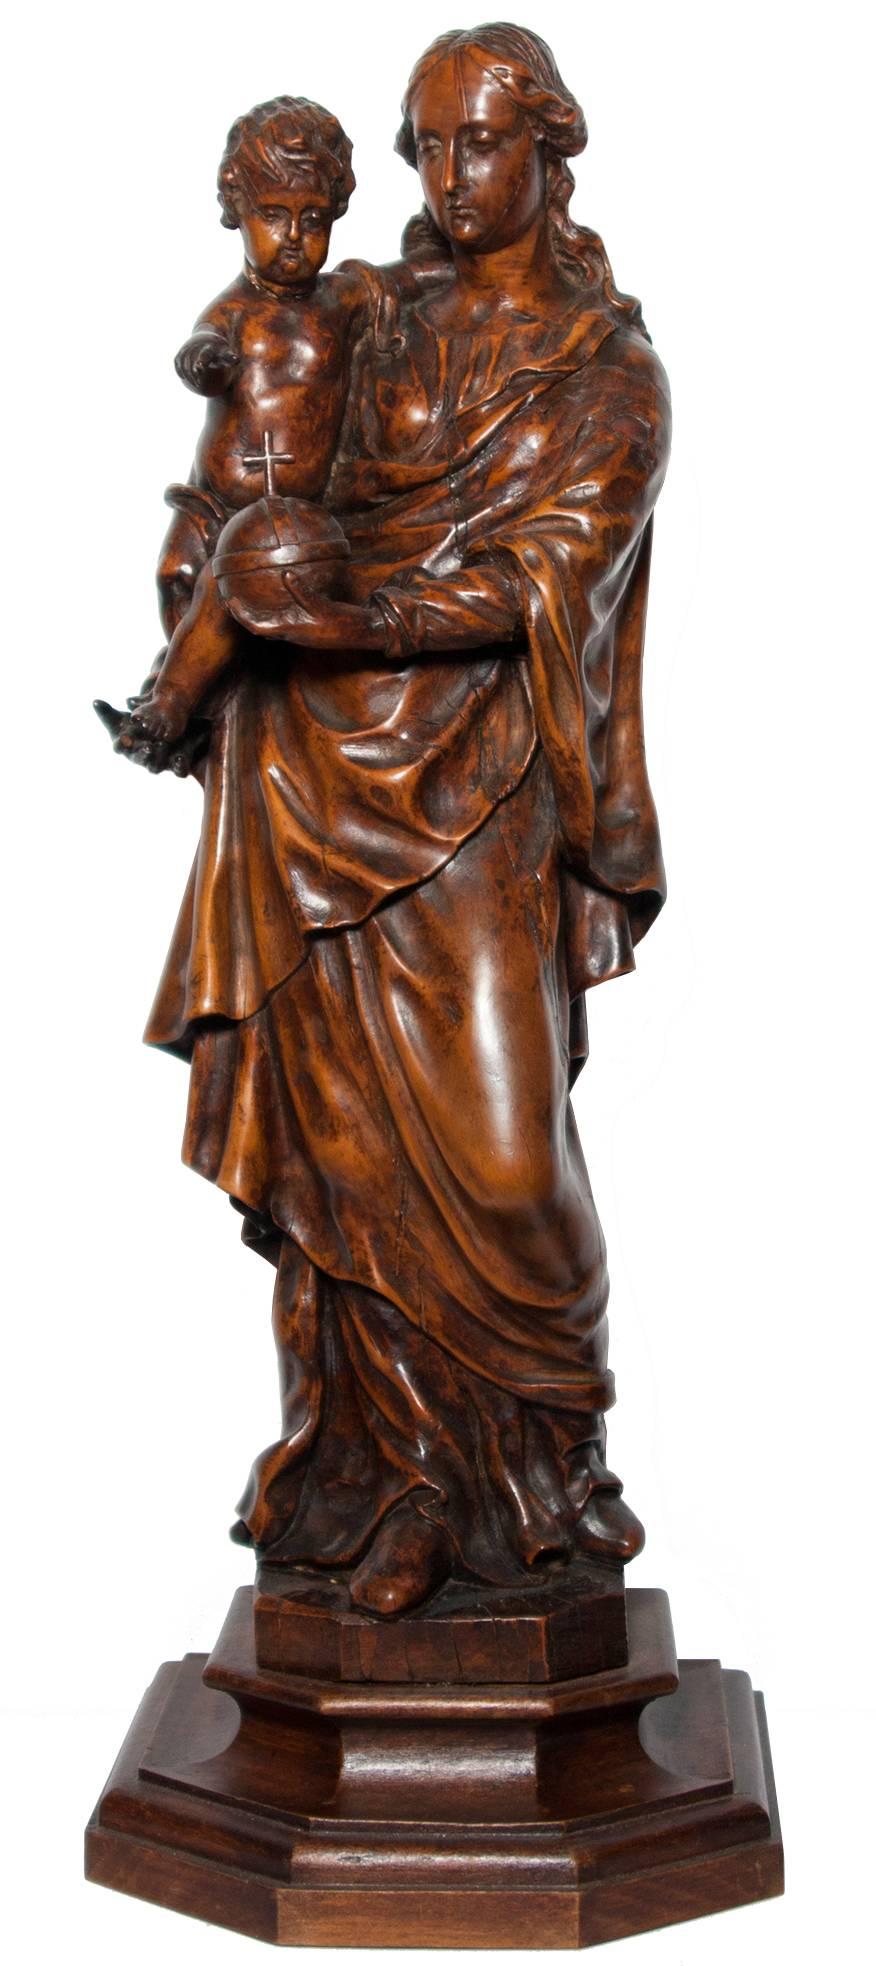 Unknown Figurative Sculpture - Flemish Virgin and Child Figure, circa 1700